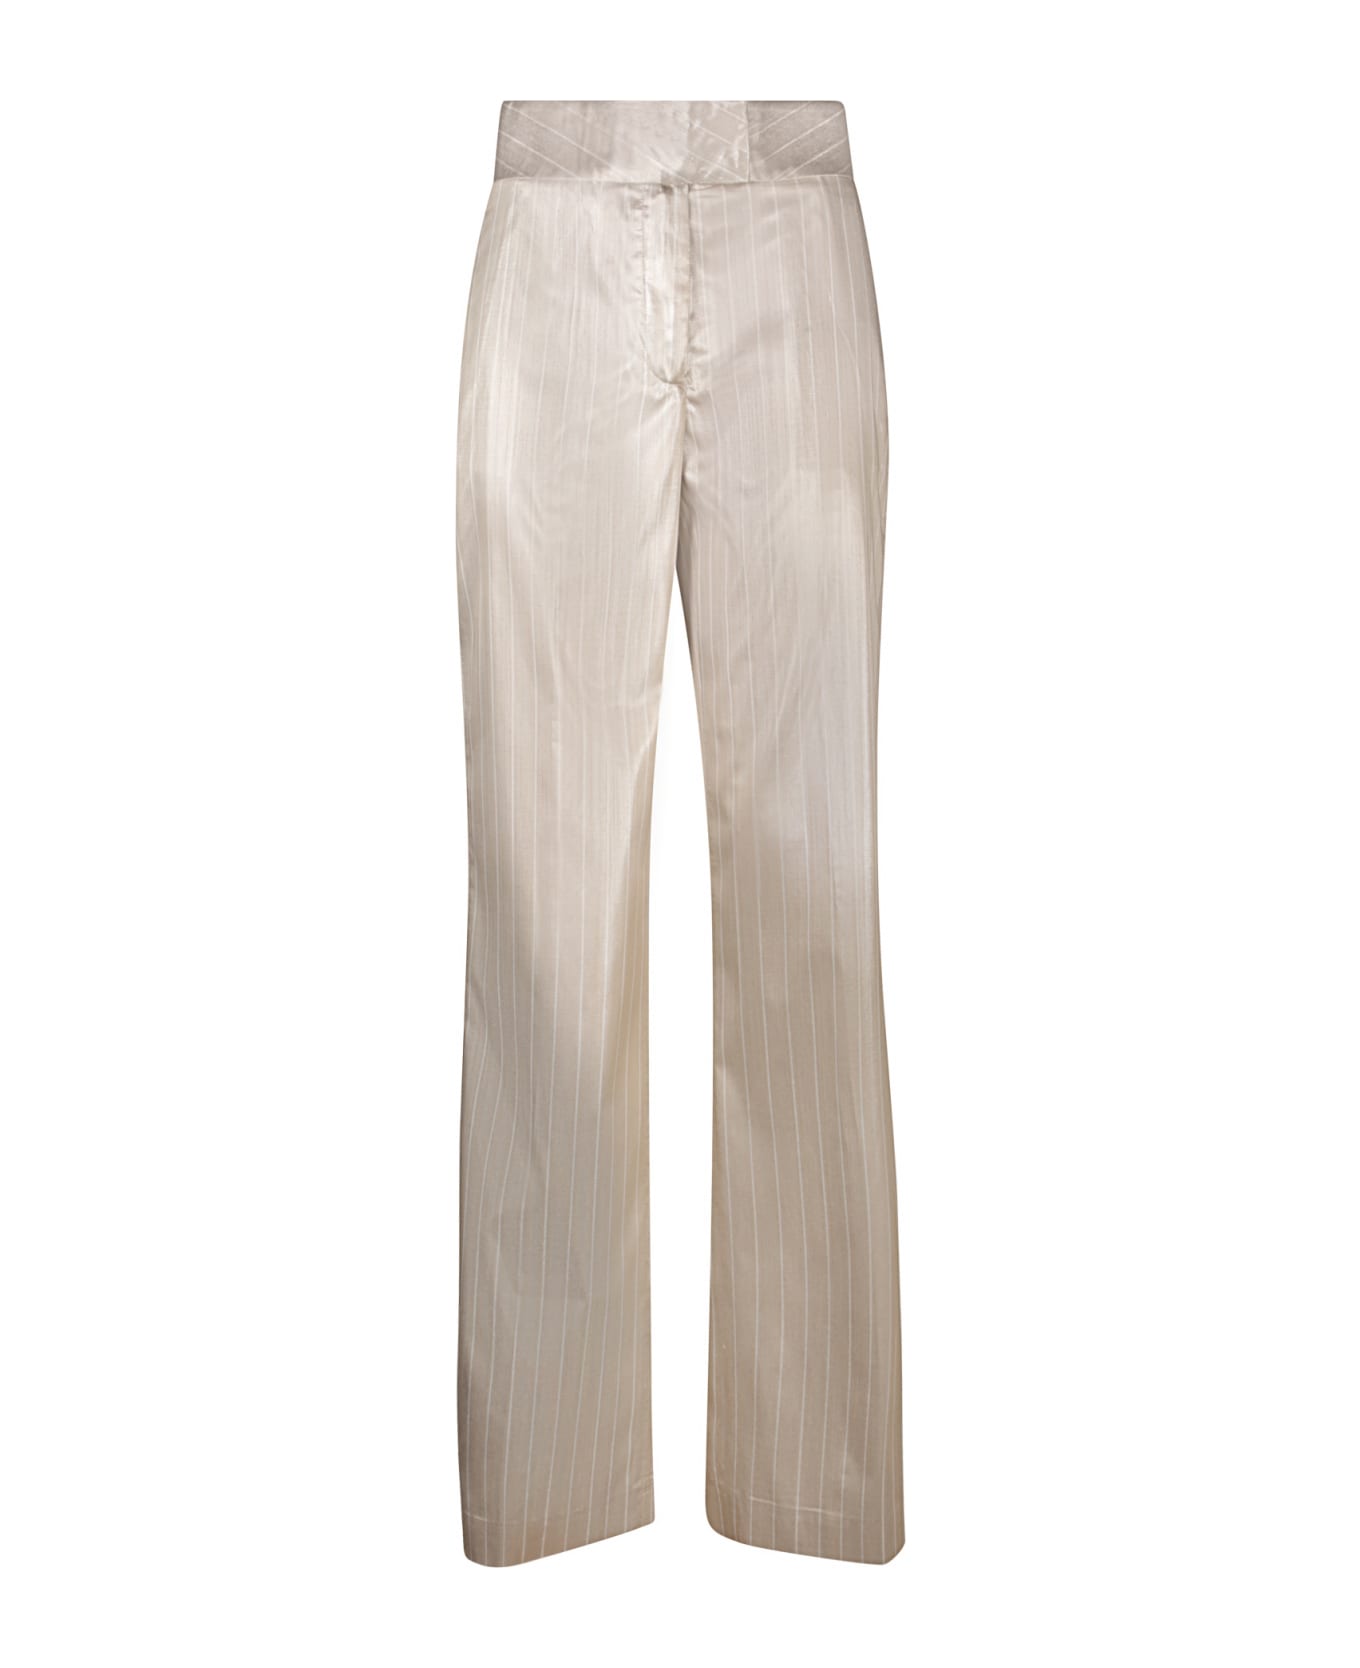 Genny Satin Striped Sand Trousers - Beige